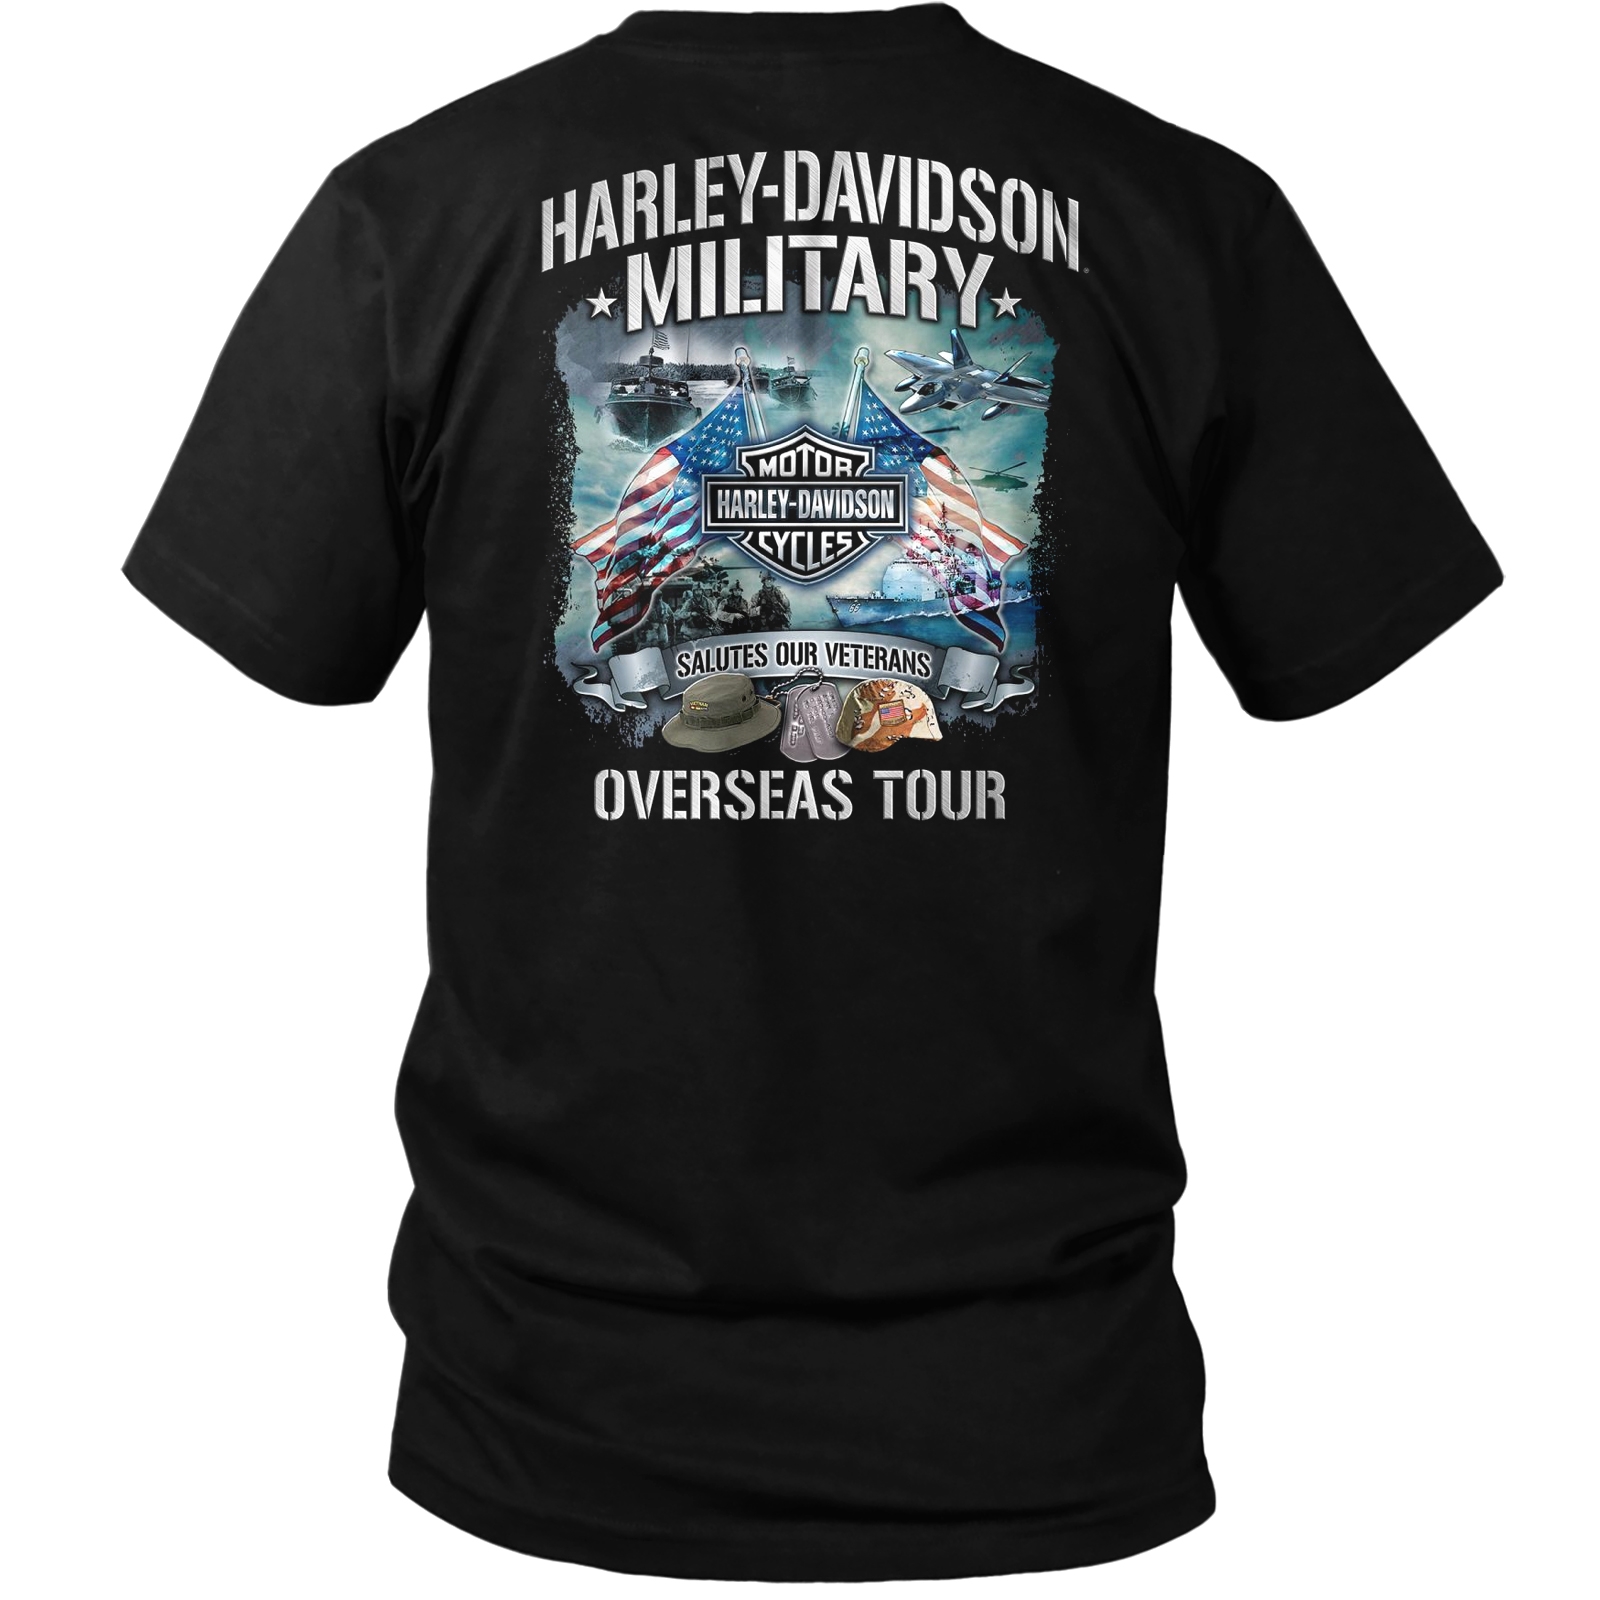 Harley-Davidson Military - Men's Bar & Shield Orange on Black T-Shirt - Overseas Tour | Salutes 